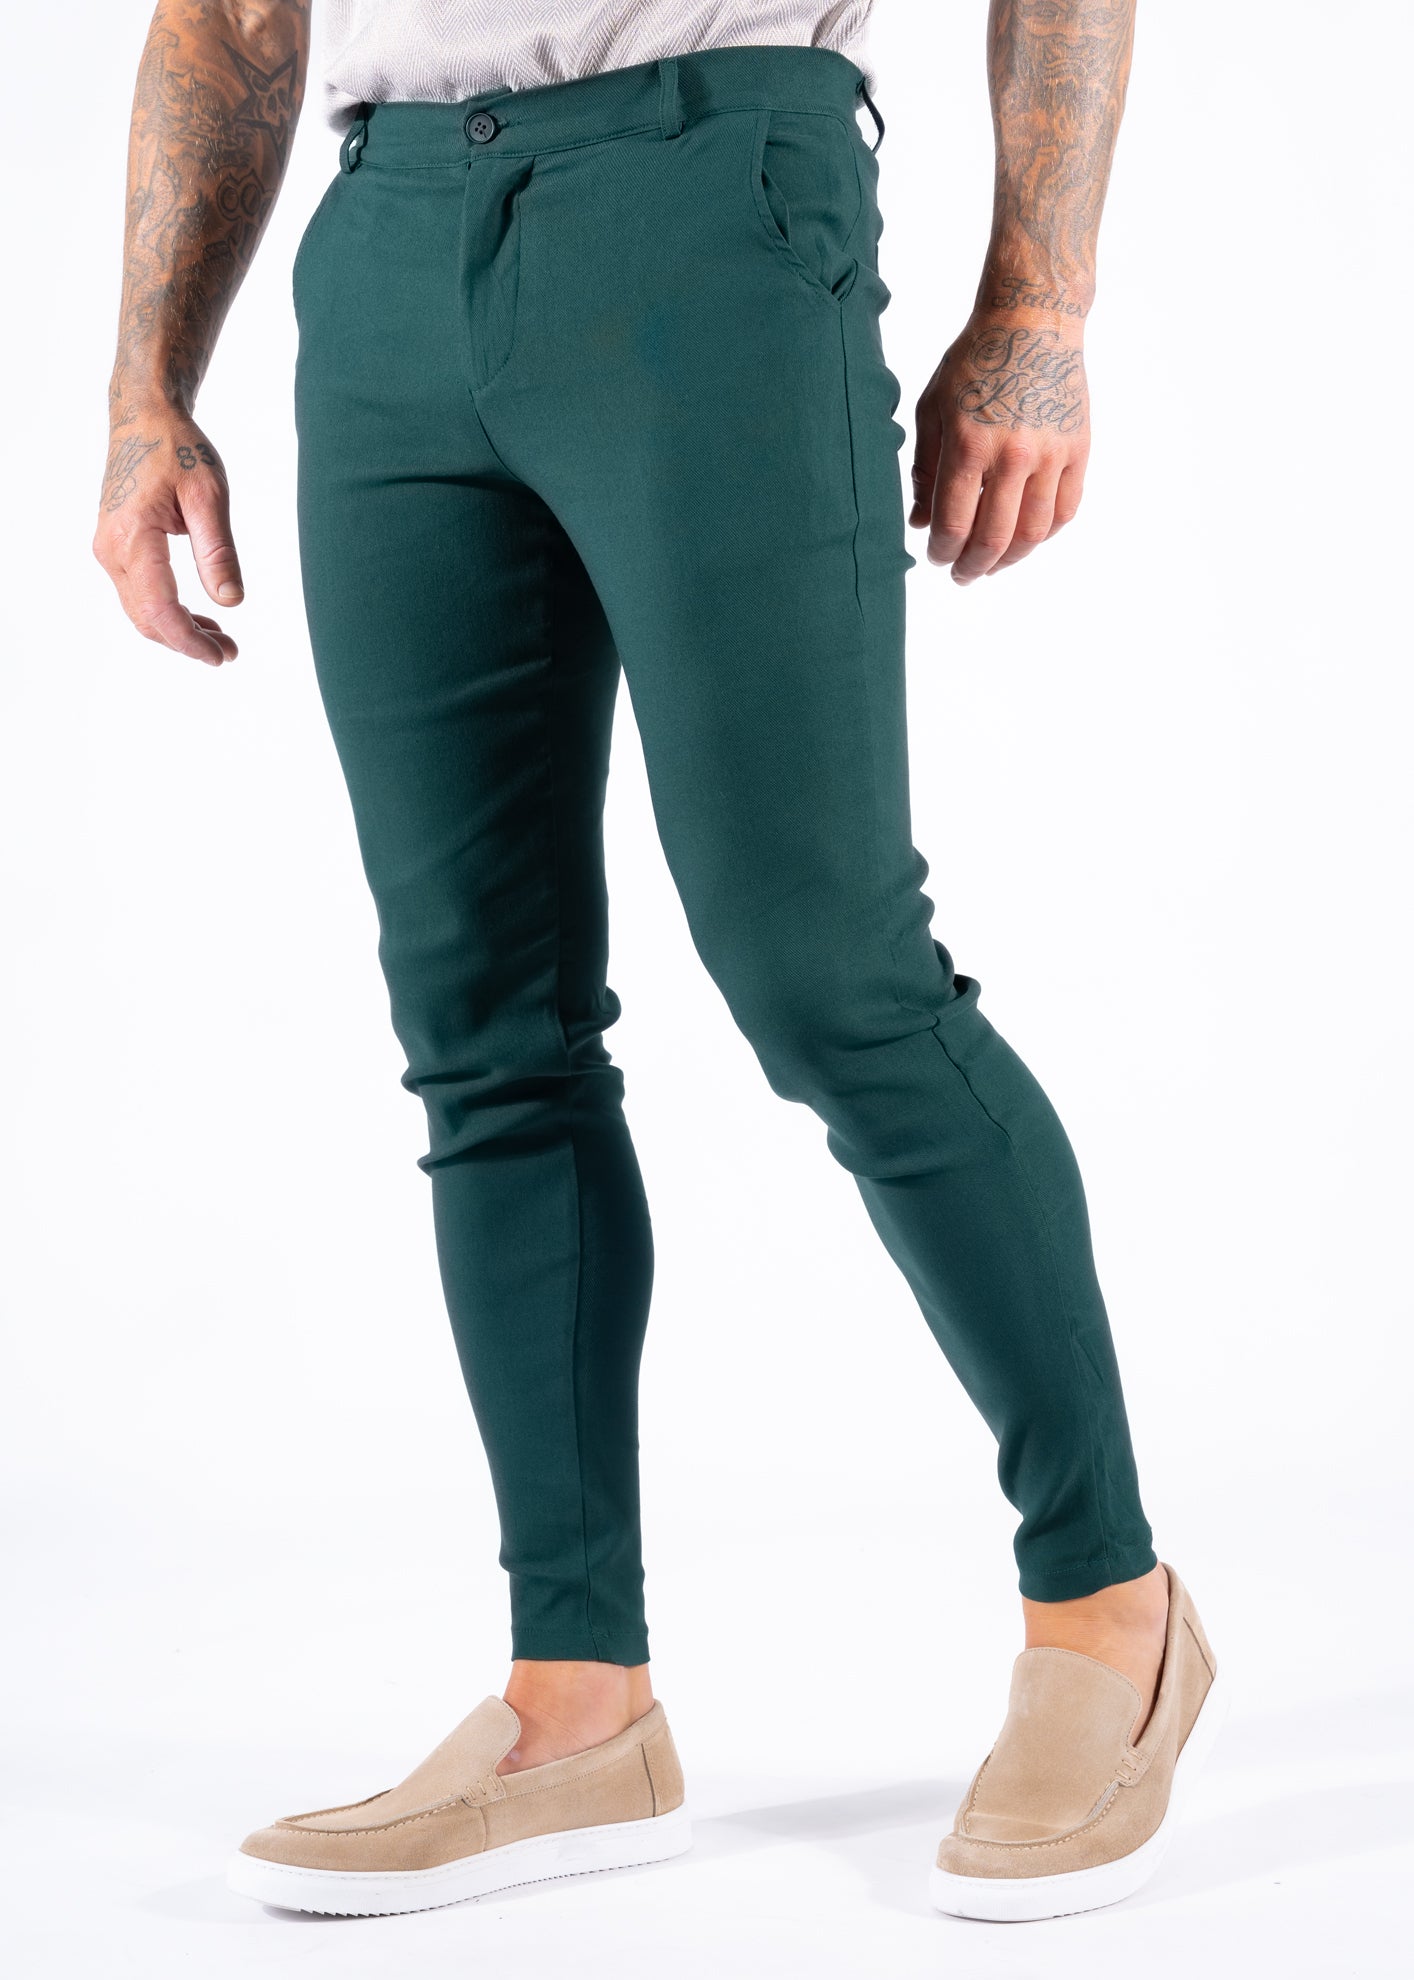 Super stretch pantalon forest green